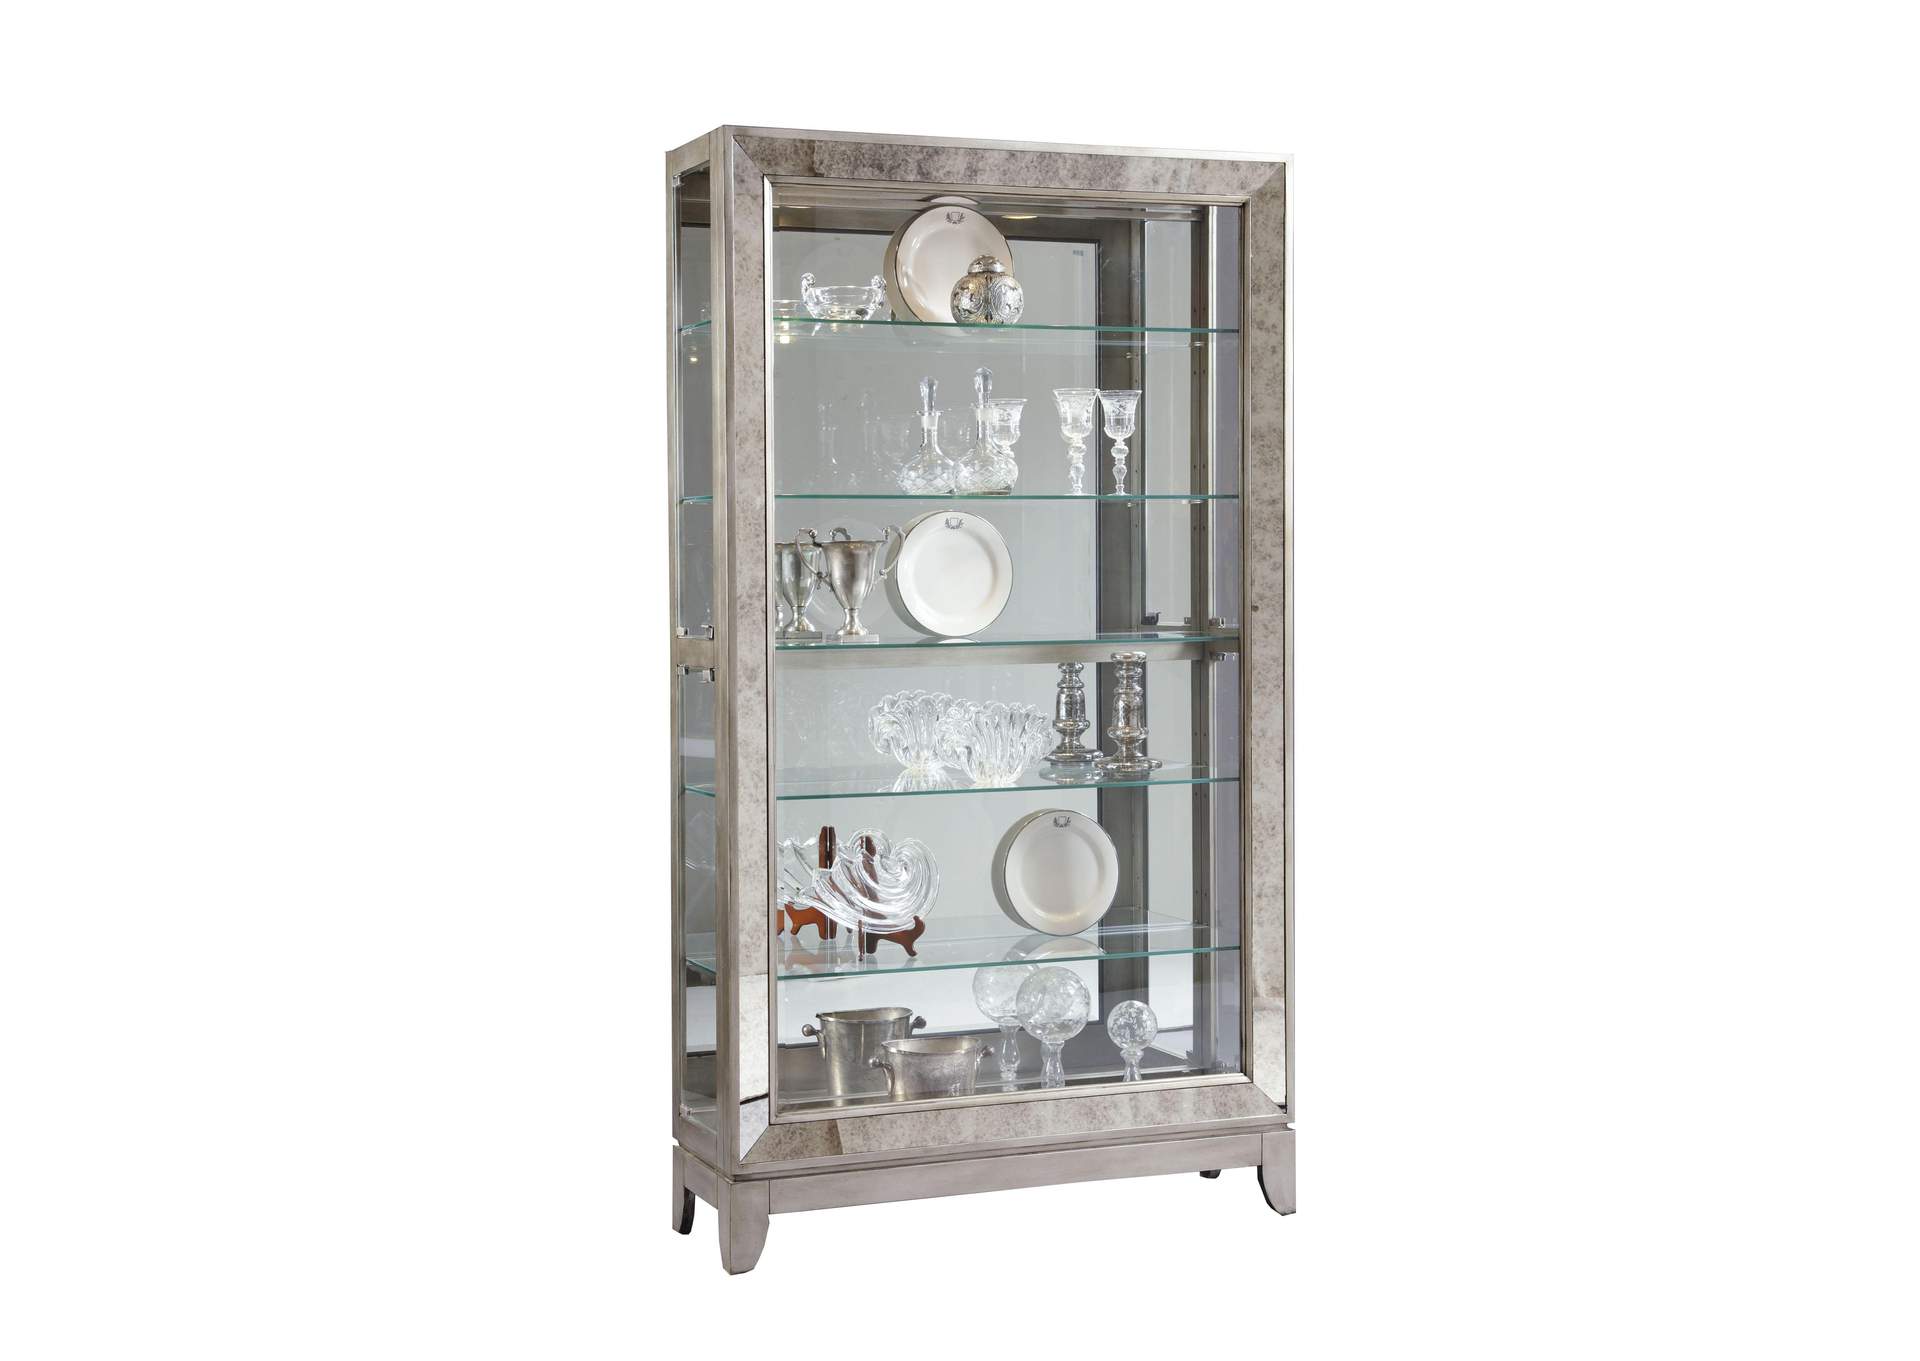 Antique Style 5 Shelf Mirrored Curio Cabinet in Aged Silver,Pulaski Furniture